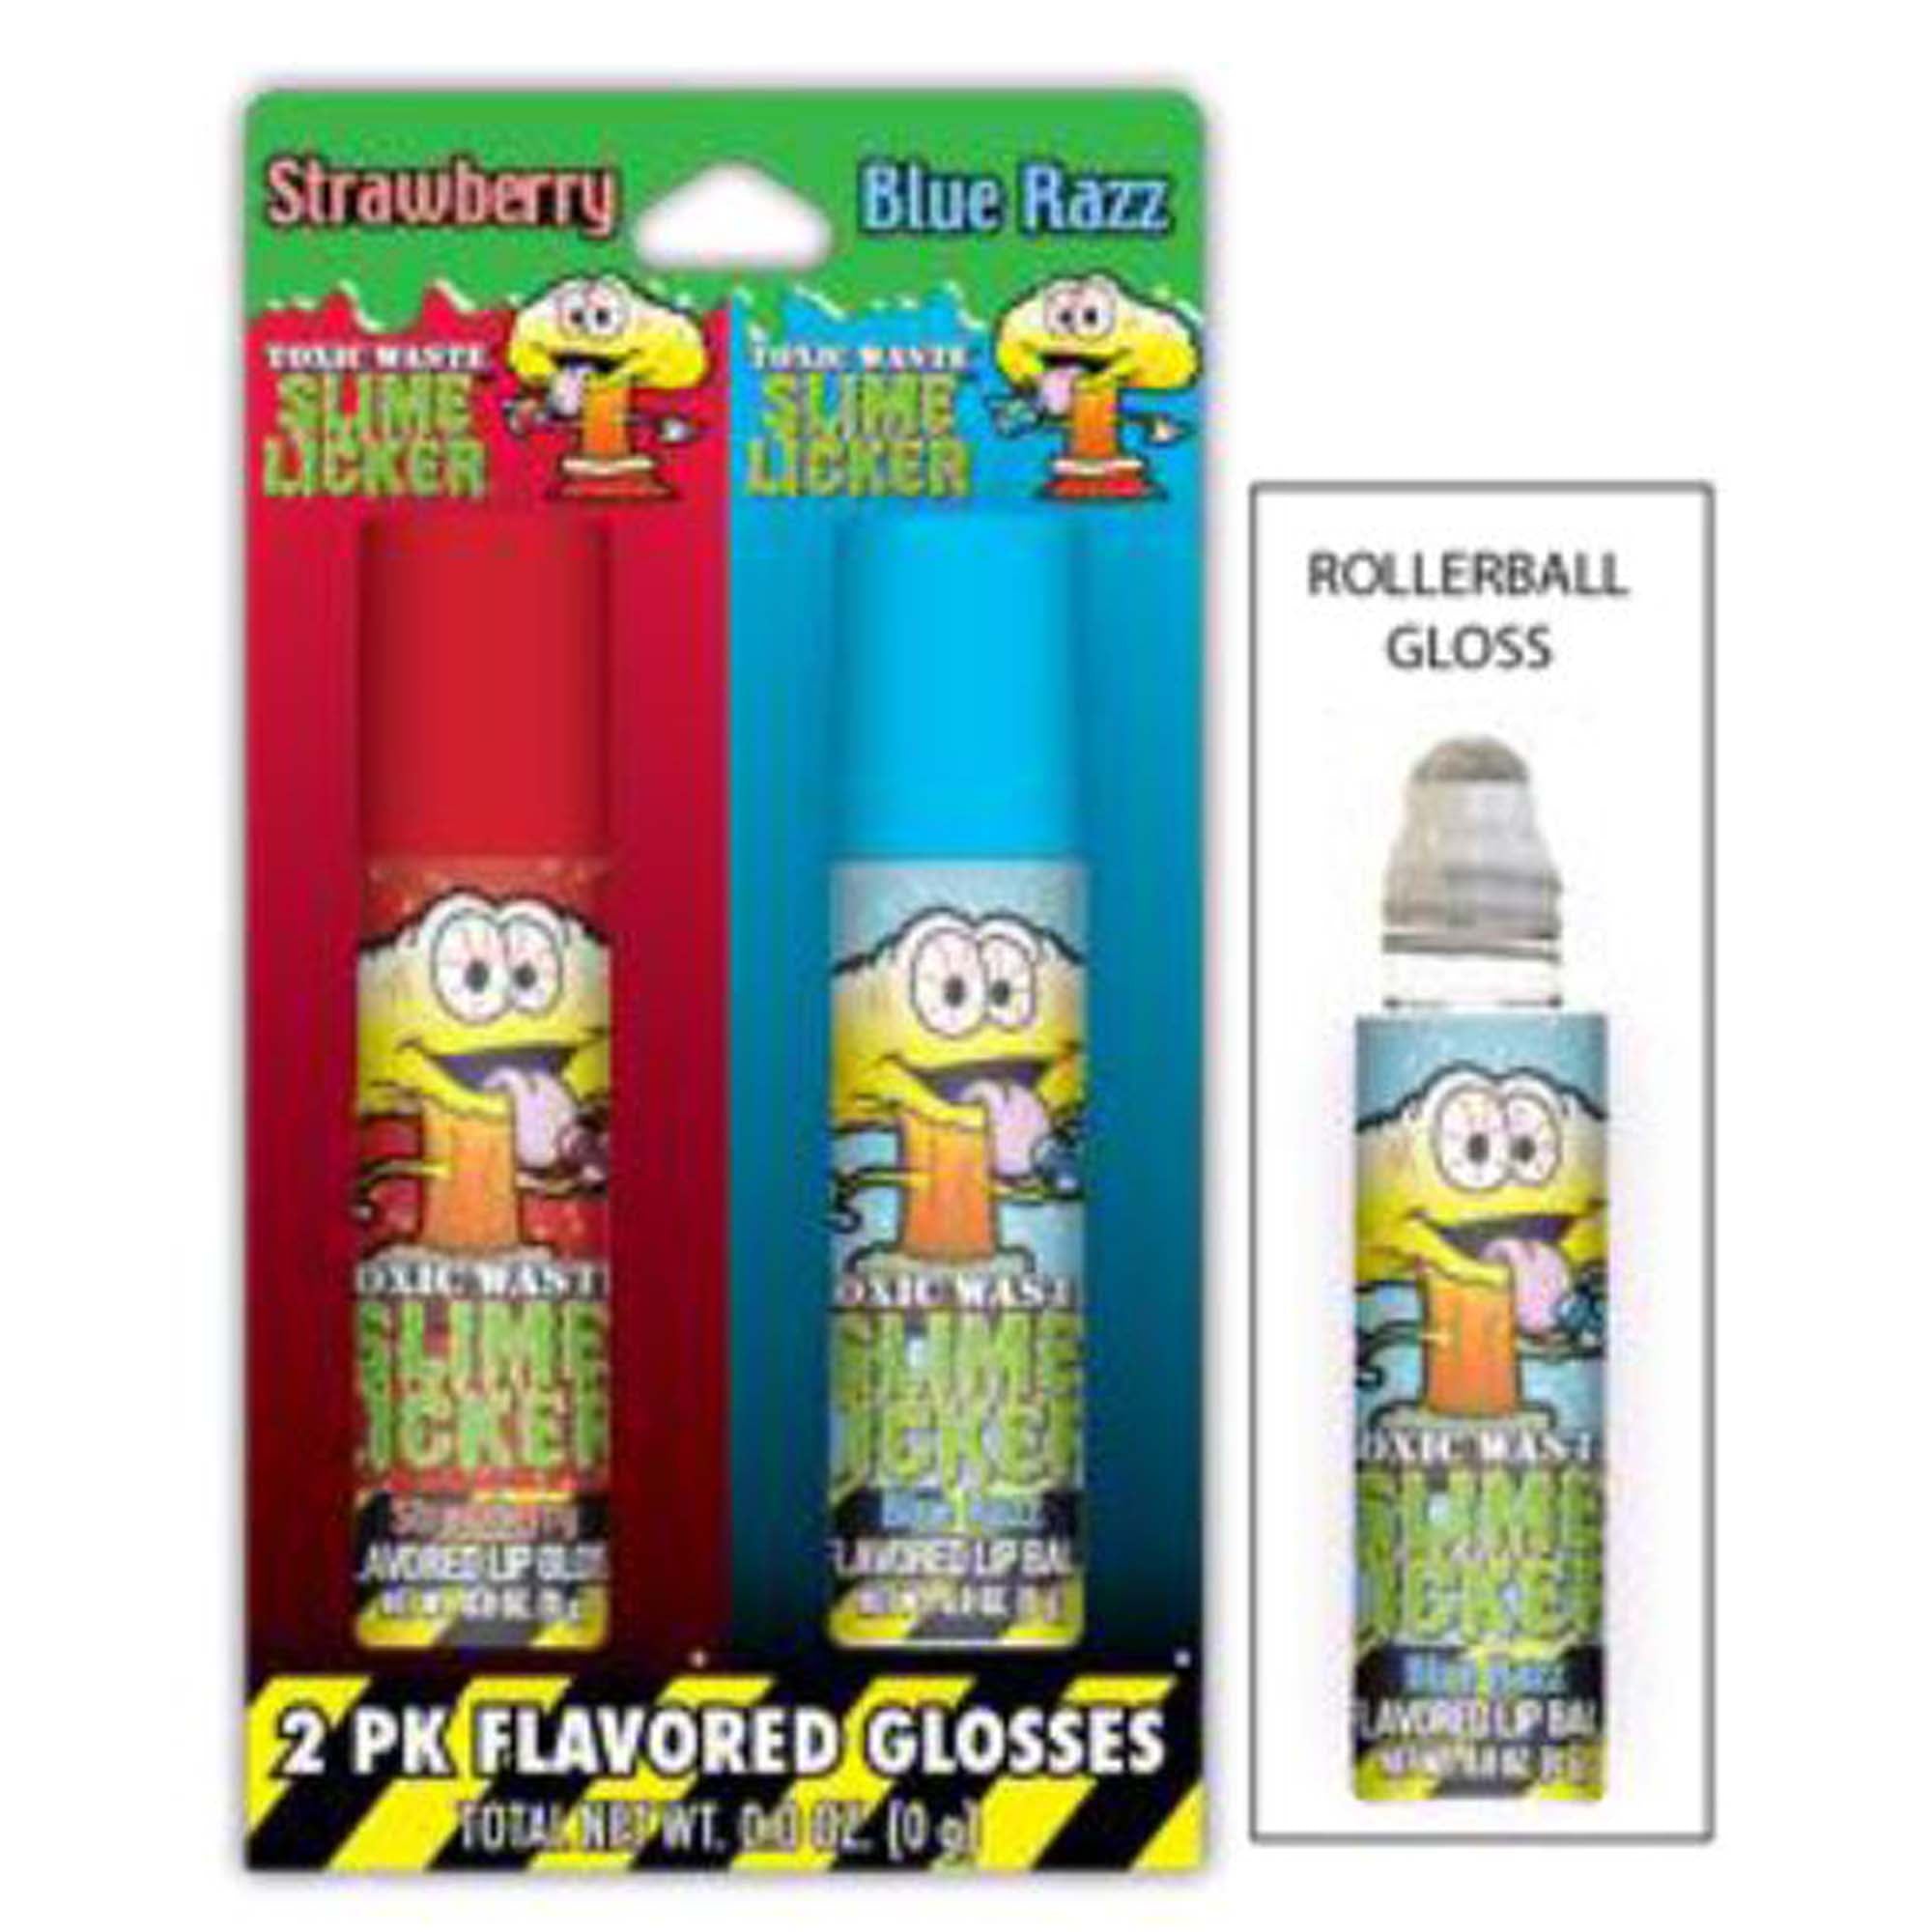 Mega Toxic Waste 2oz Slime Licker Set of 2 | Strawberry & Blue Raz